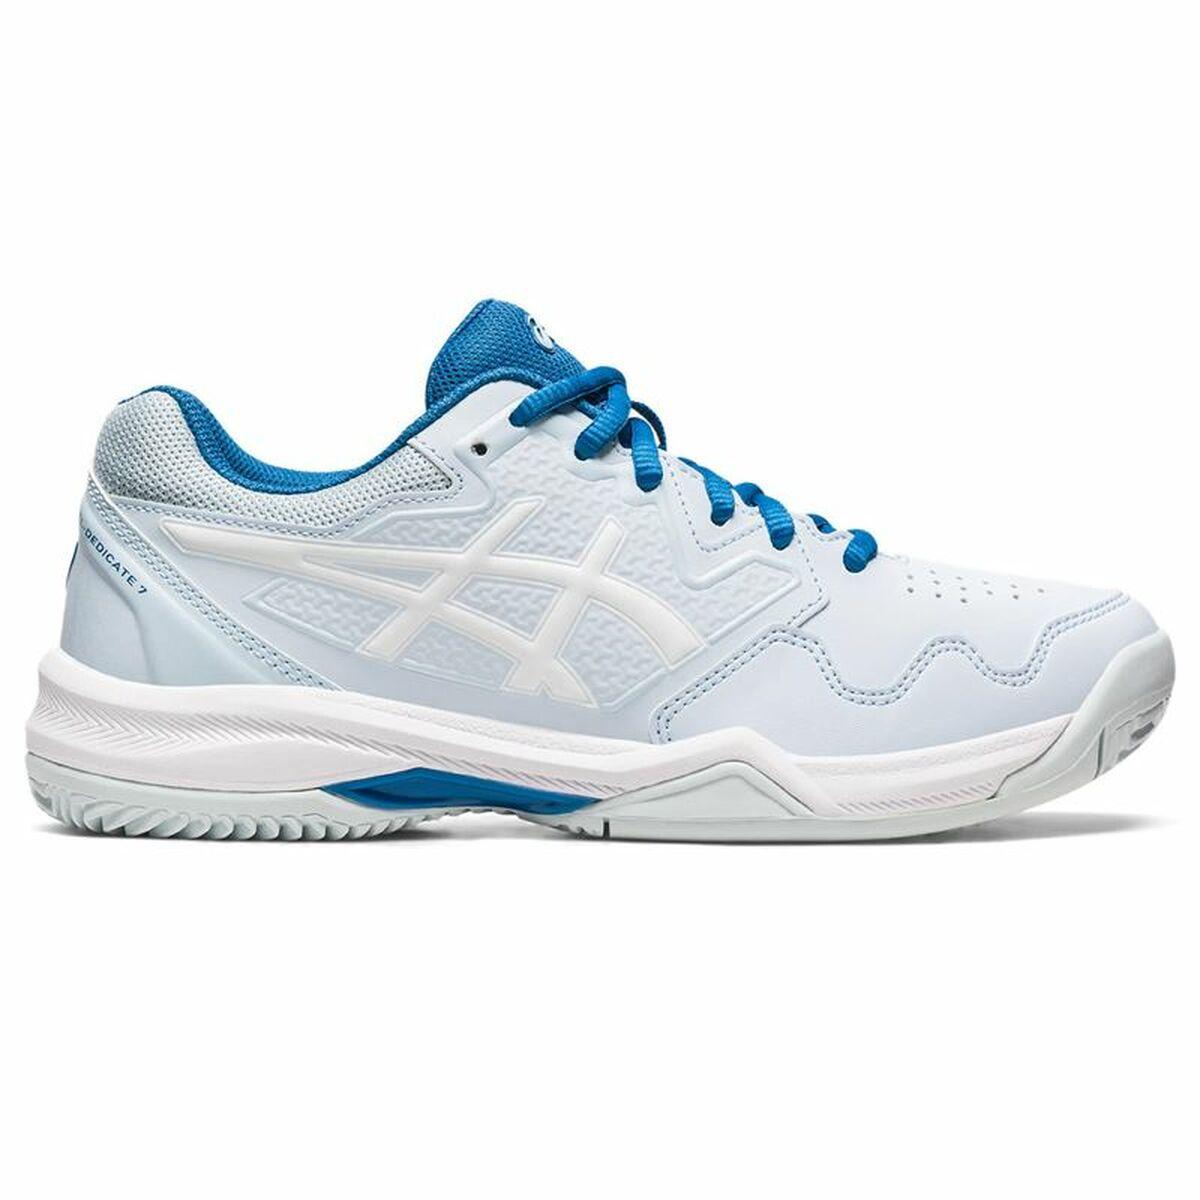 Asics Women's Tennis Shoes Gel-dedicate 7 Lady White in Blue | Lyst